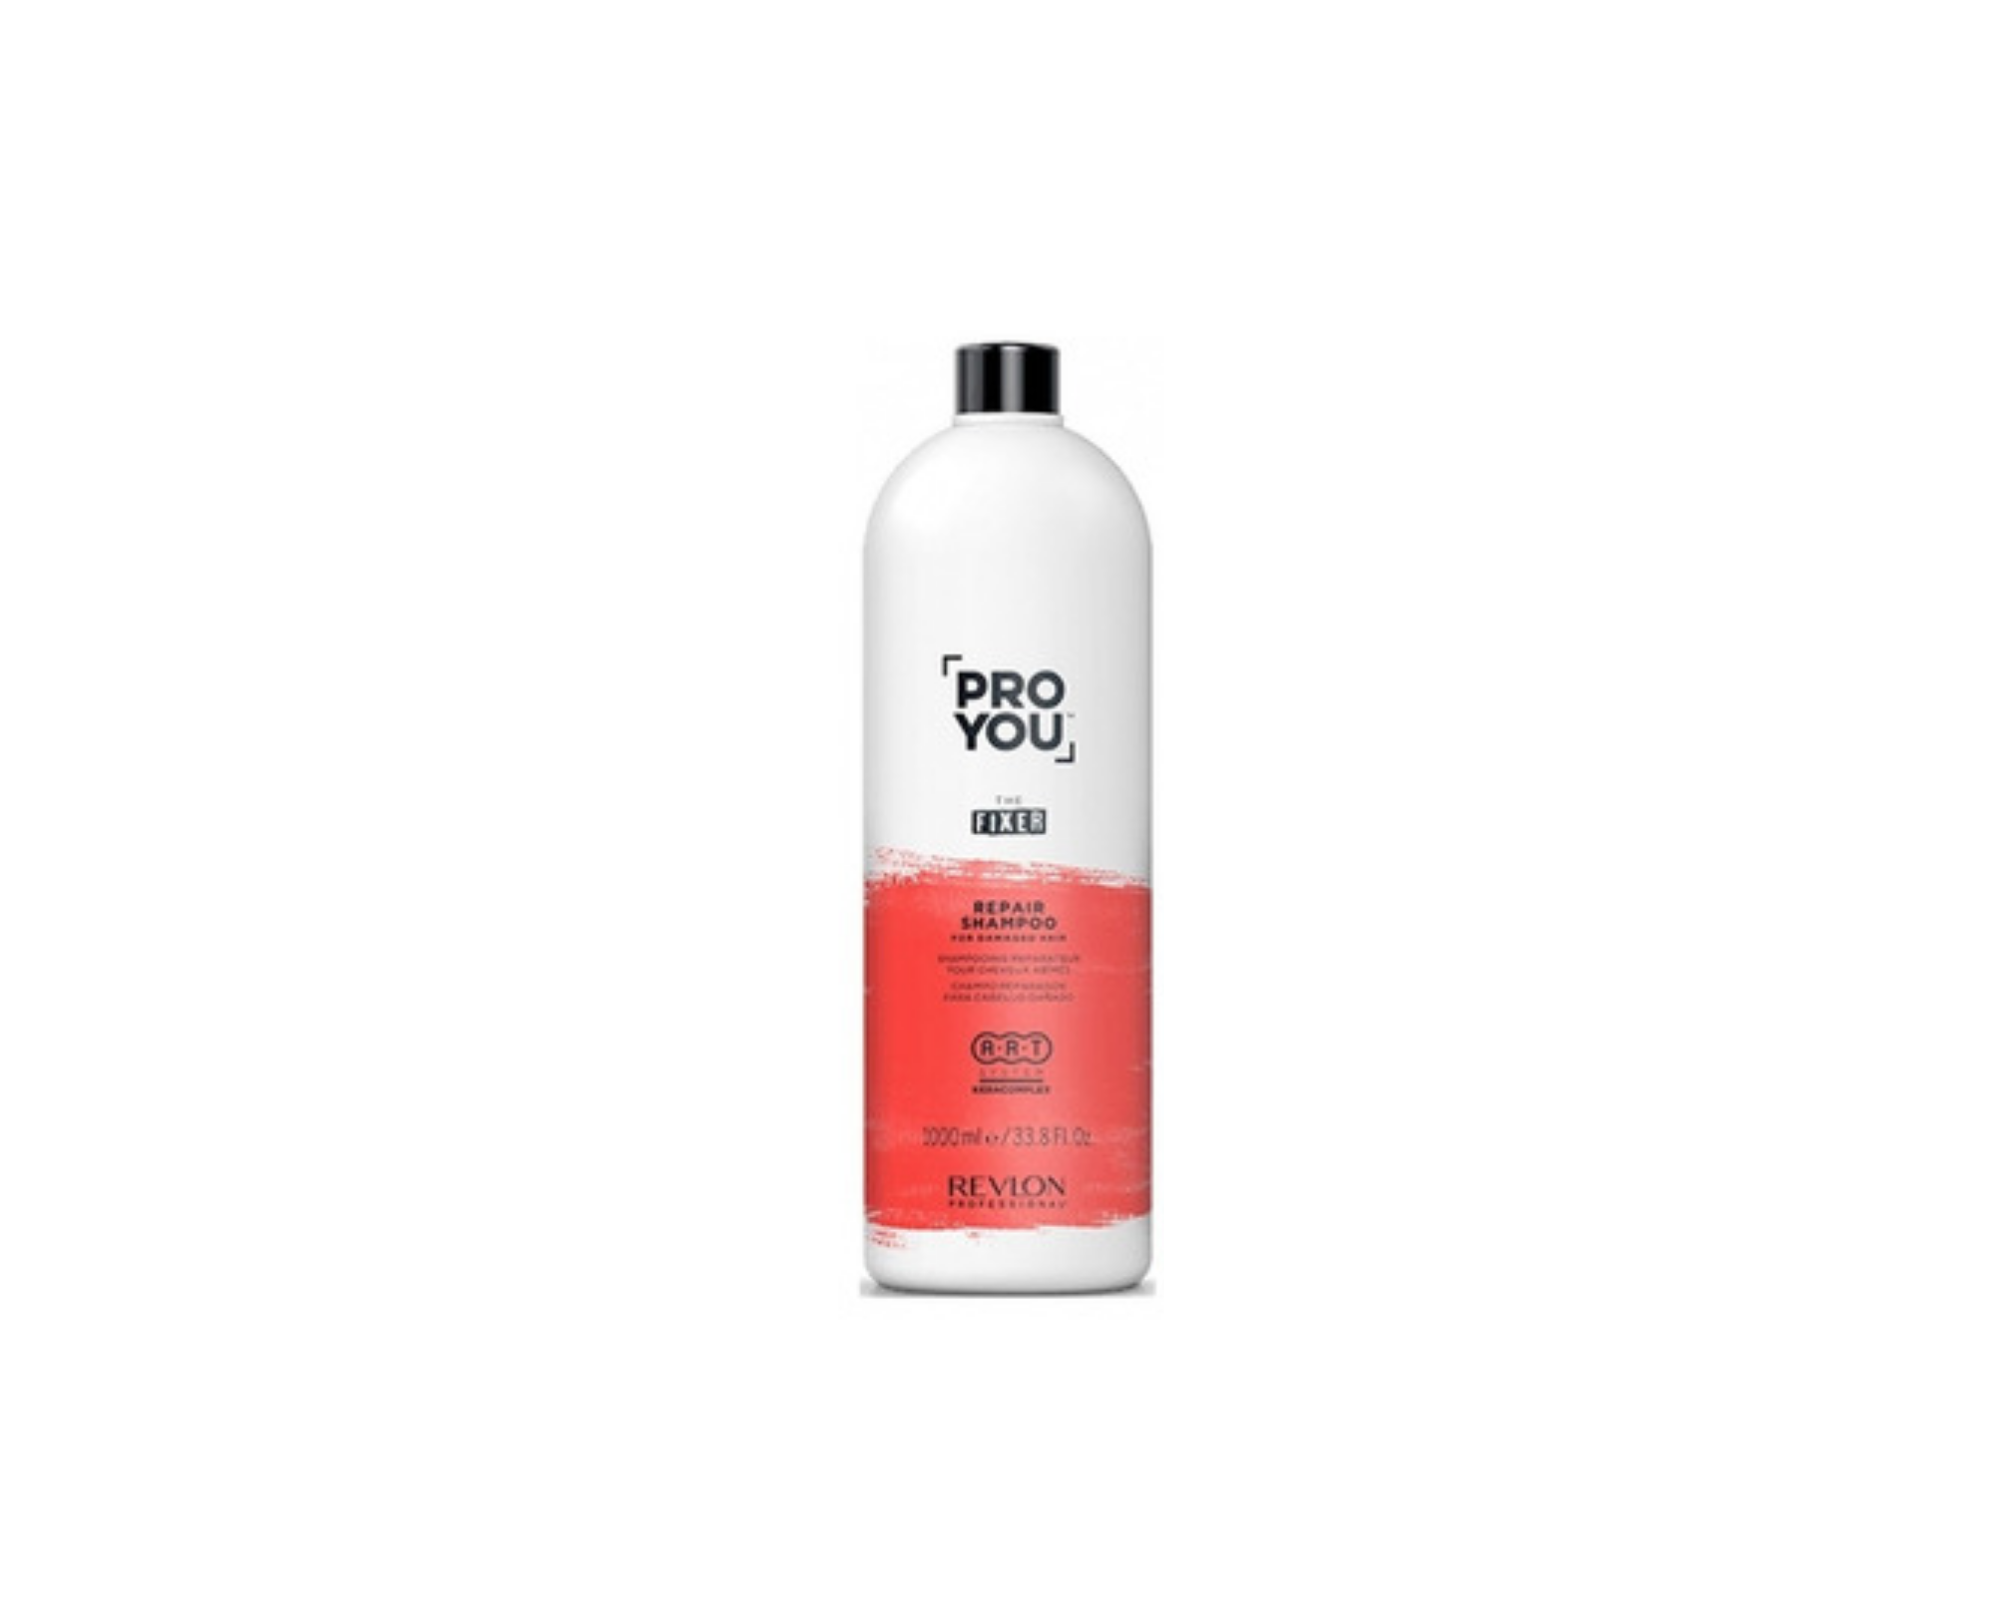 Revlon Pro You Repair Shampoo - "The Fixer"